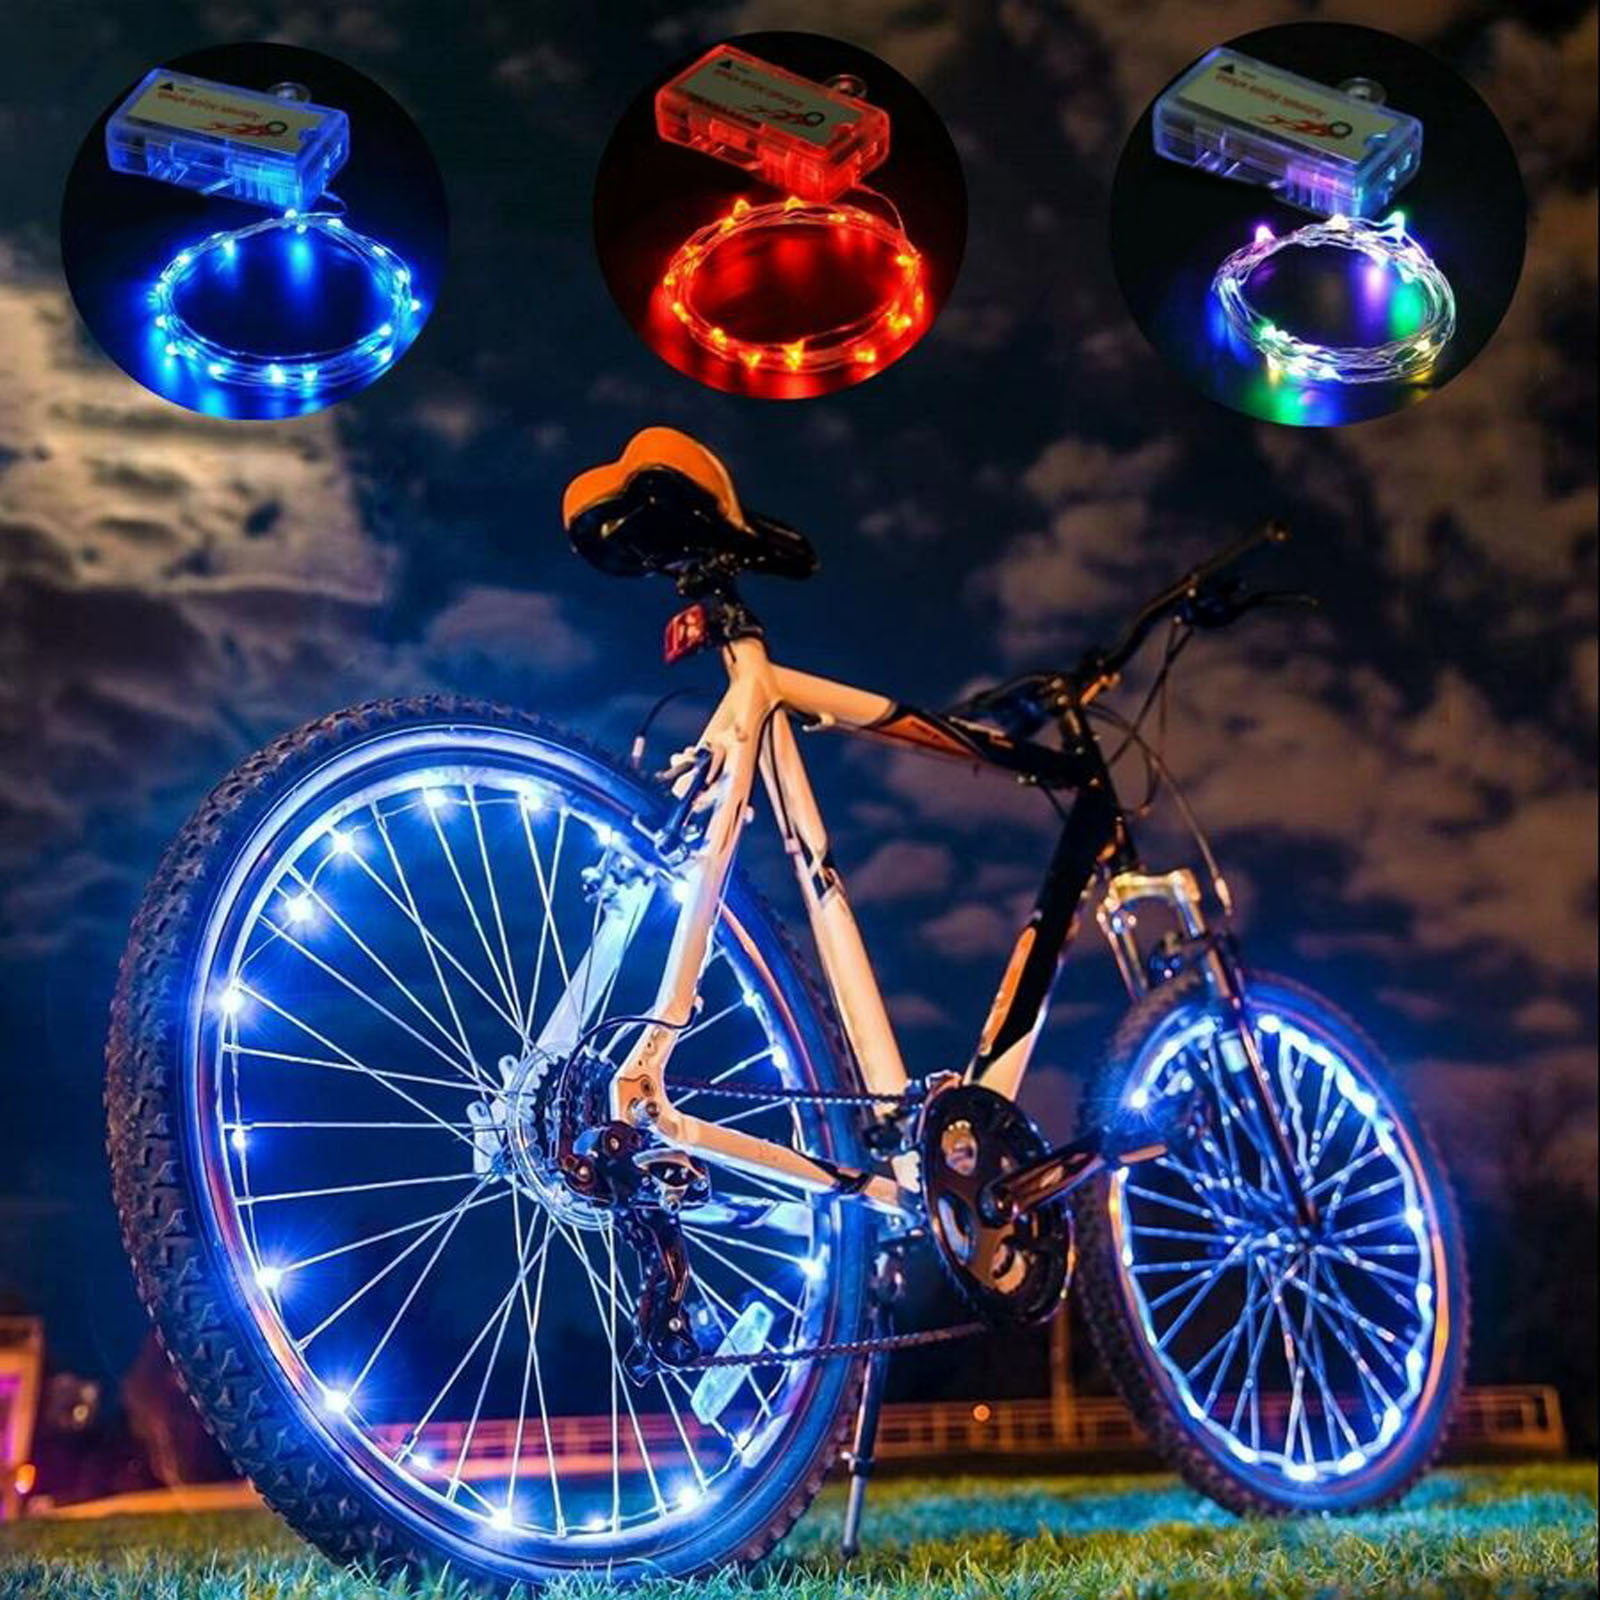 LED Bicycle Bike Cycling Rim Lights Auto Open & Close Wheel Spoke Light String 